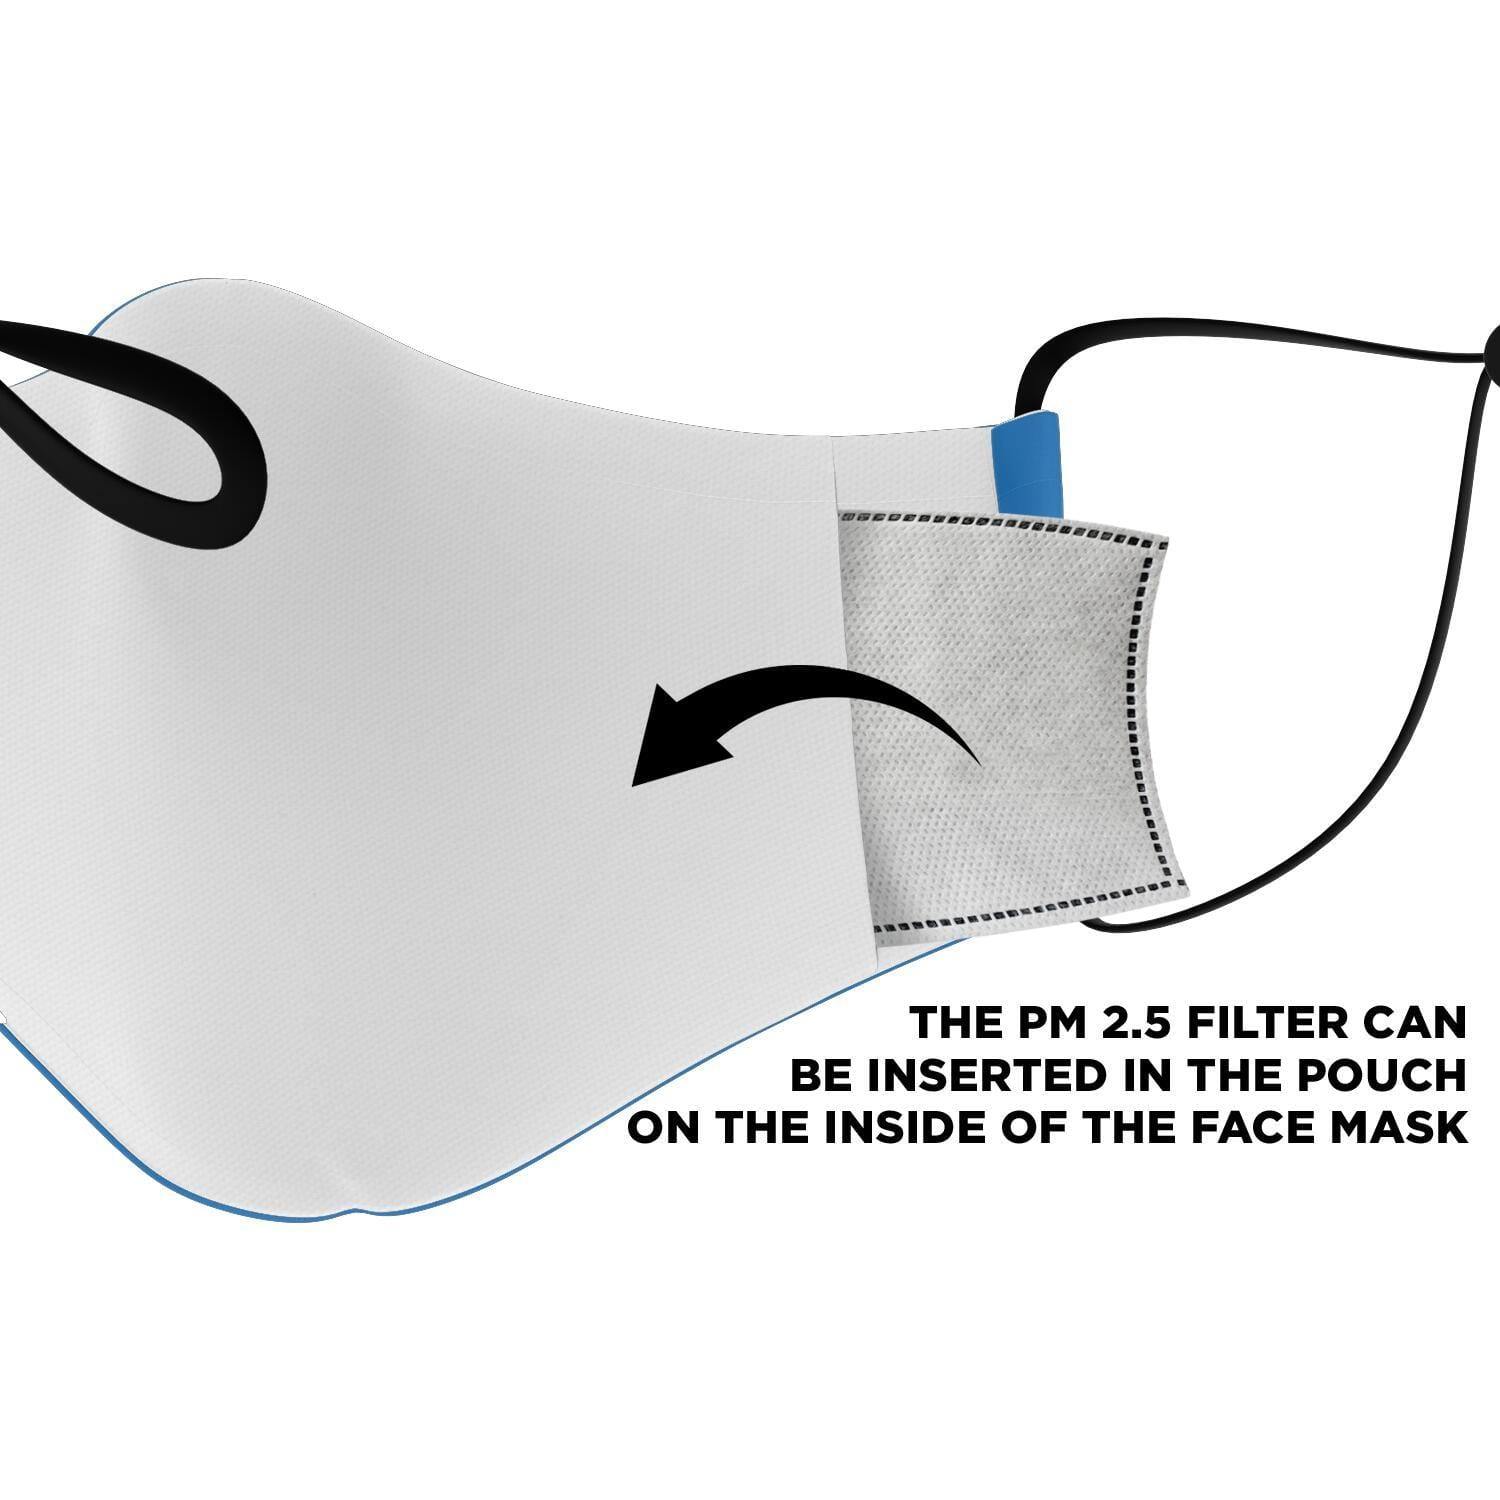 In Dr. Fauci We Trust Face Mask - True Blue Gear